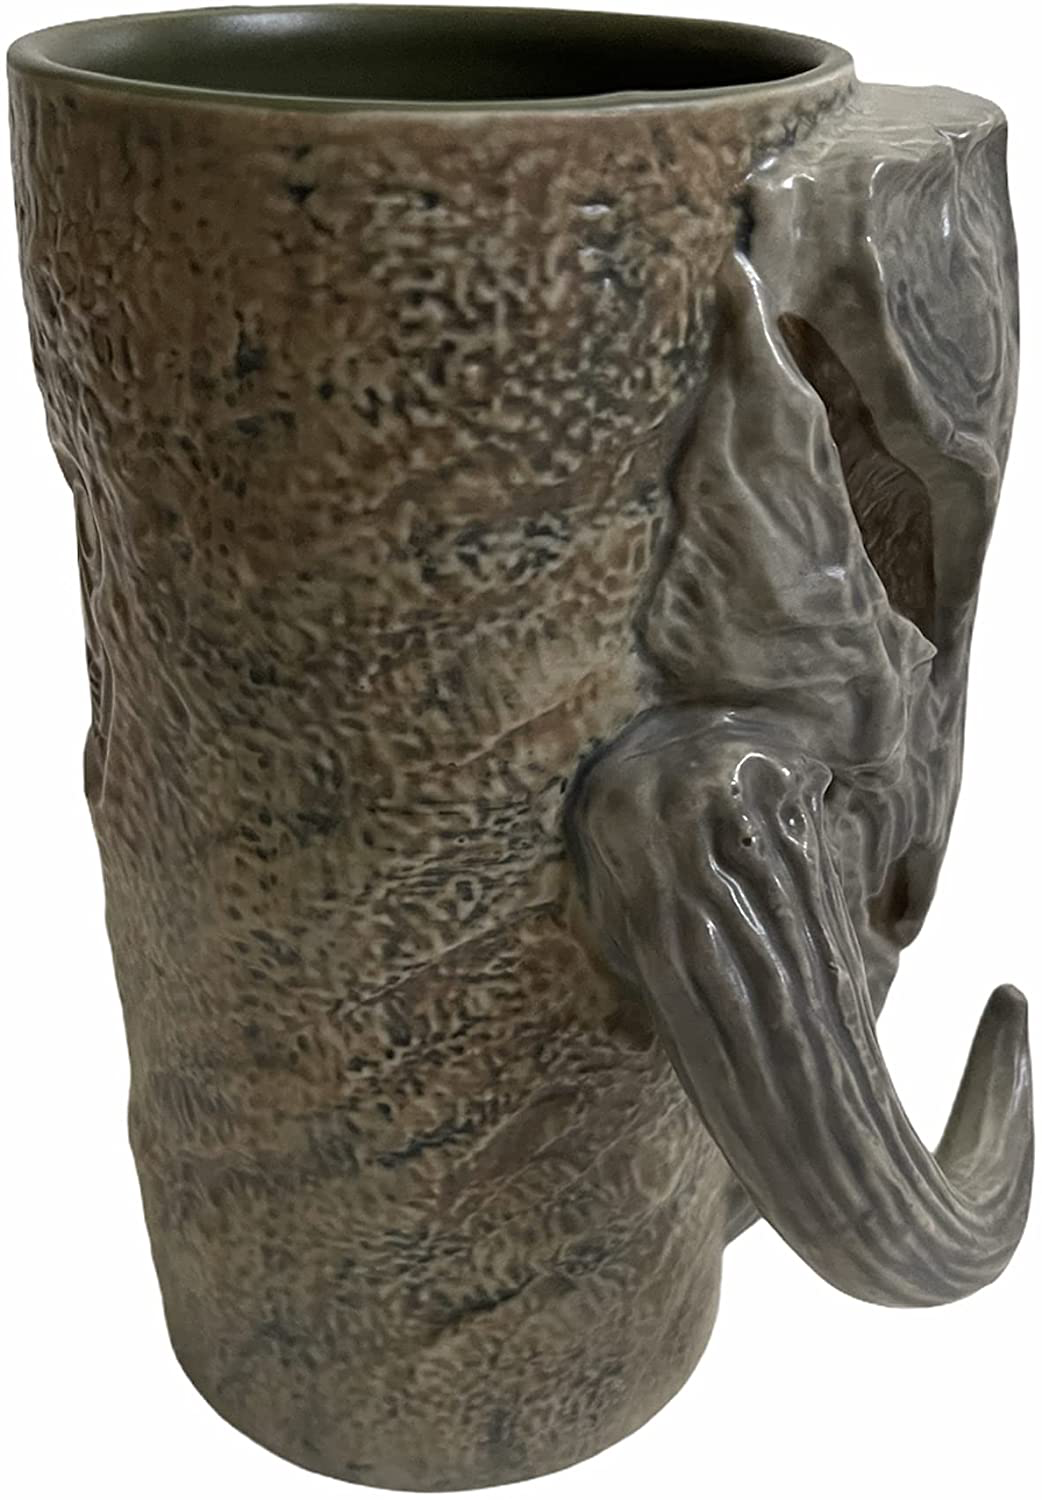 SWGE Boba Fett Mythosaur Skull Mug Cup 3